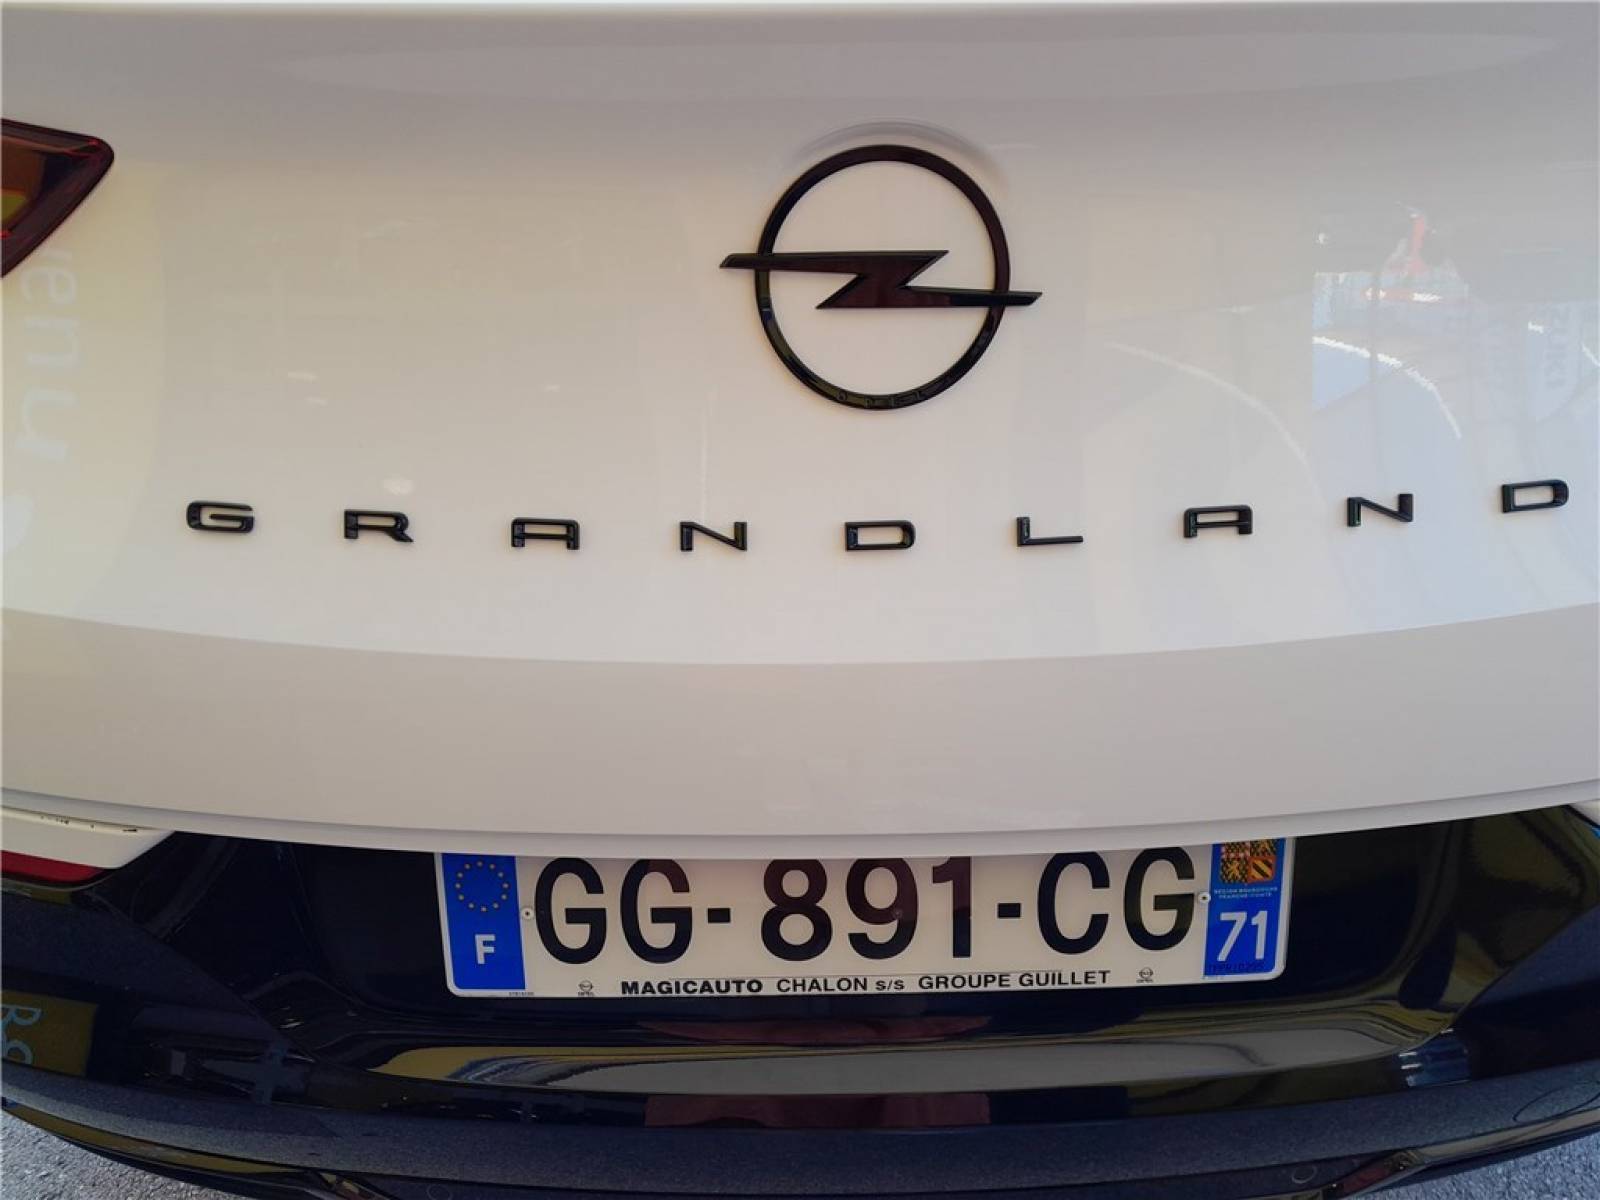 OPEL Grandland 1.2 Turbo 130 ch BVA8 - véhicule d'occasion - Groupe Guillet - Opel Magicauto - Chalon-sur-Saône - 71380 - Saint-Marcel - 5